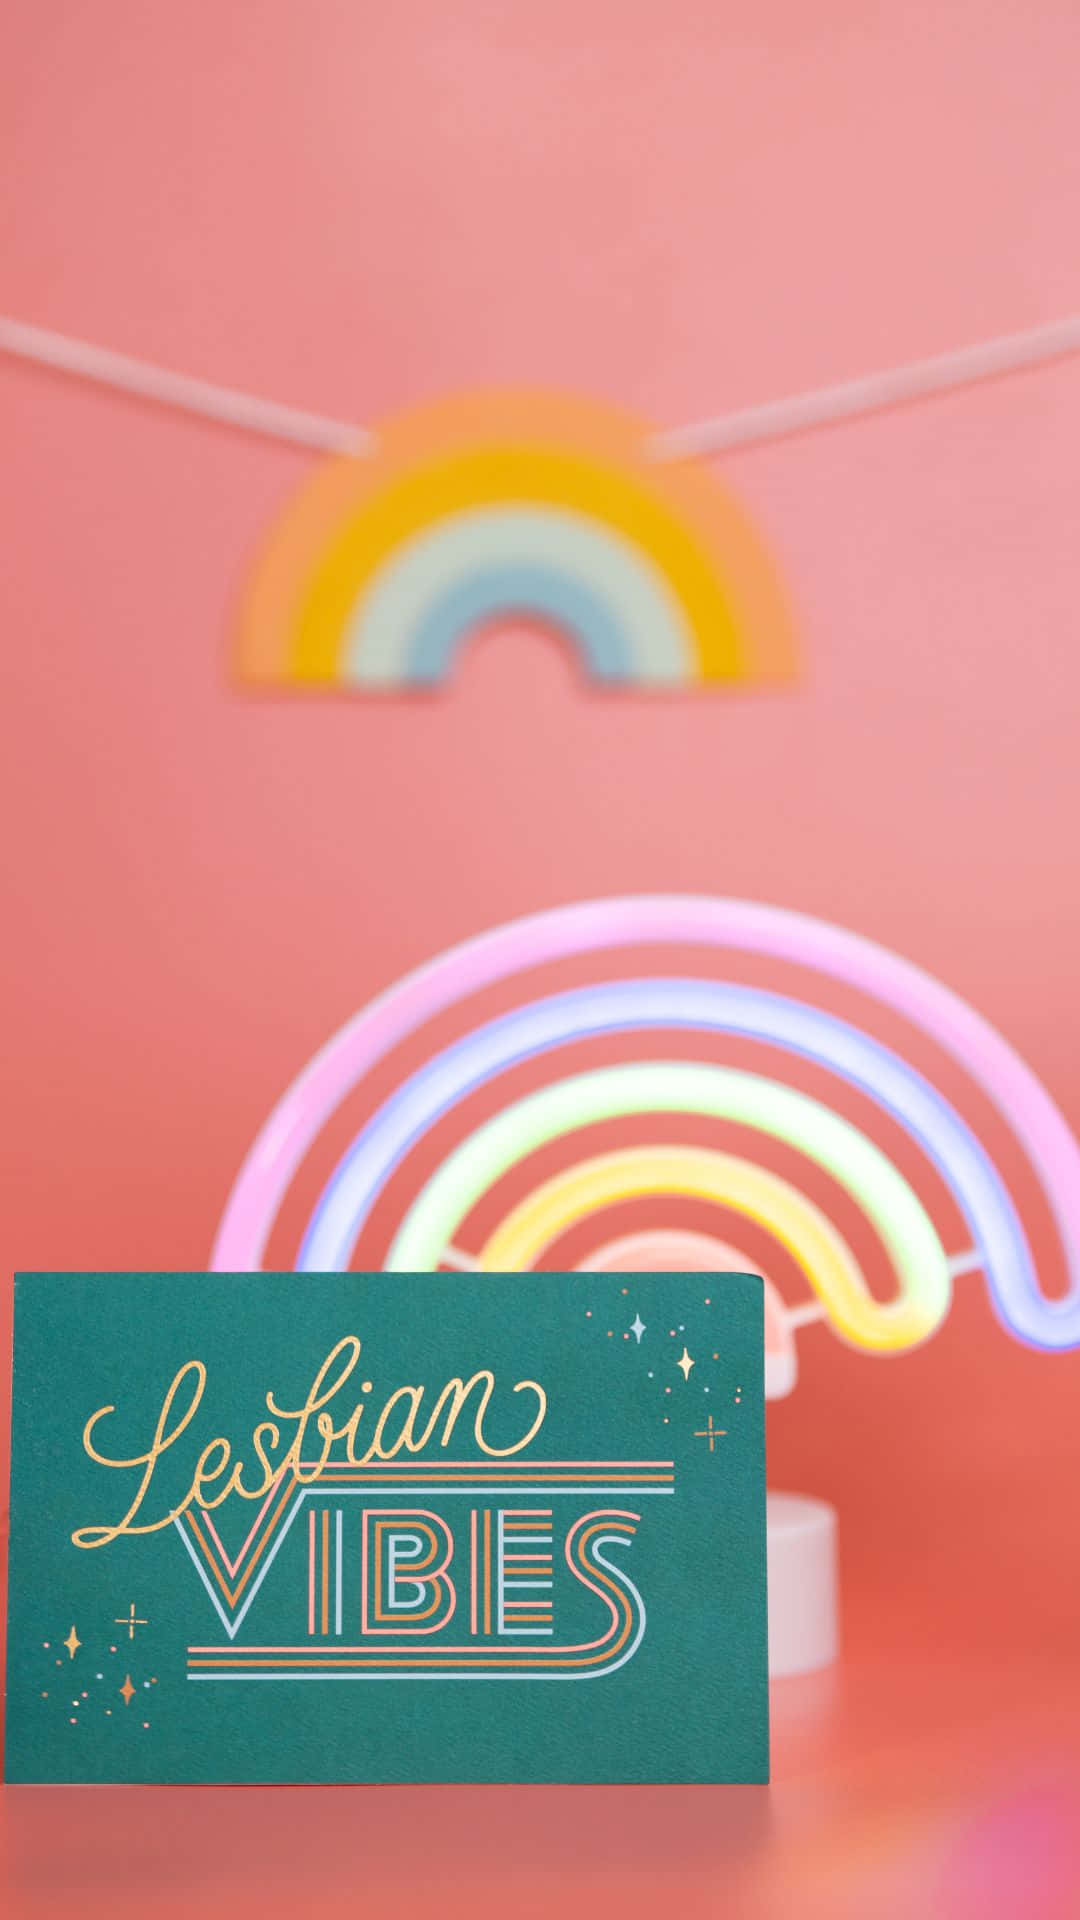 Lesbian Vibes iPhone Wallpaper